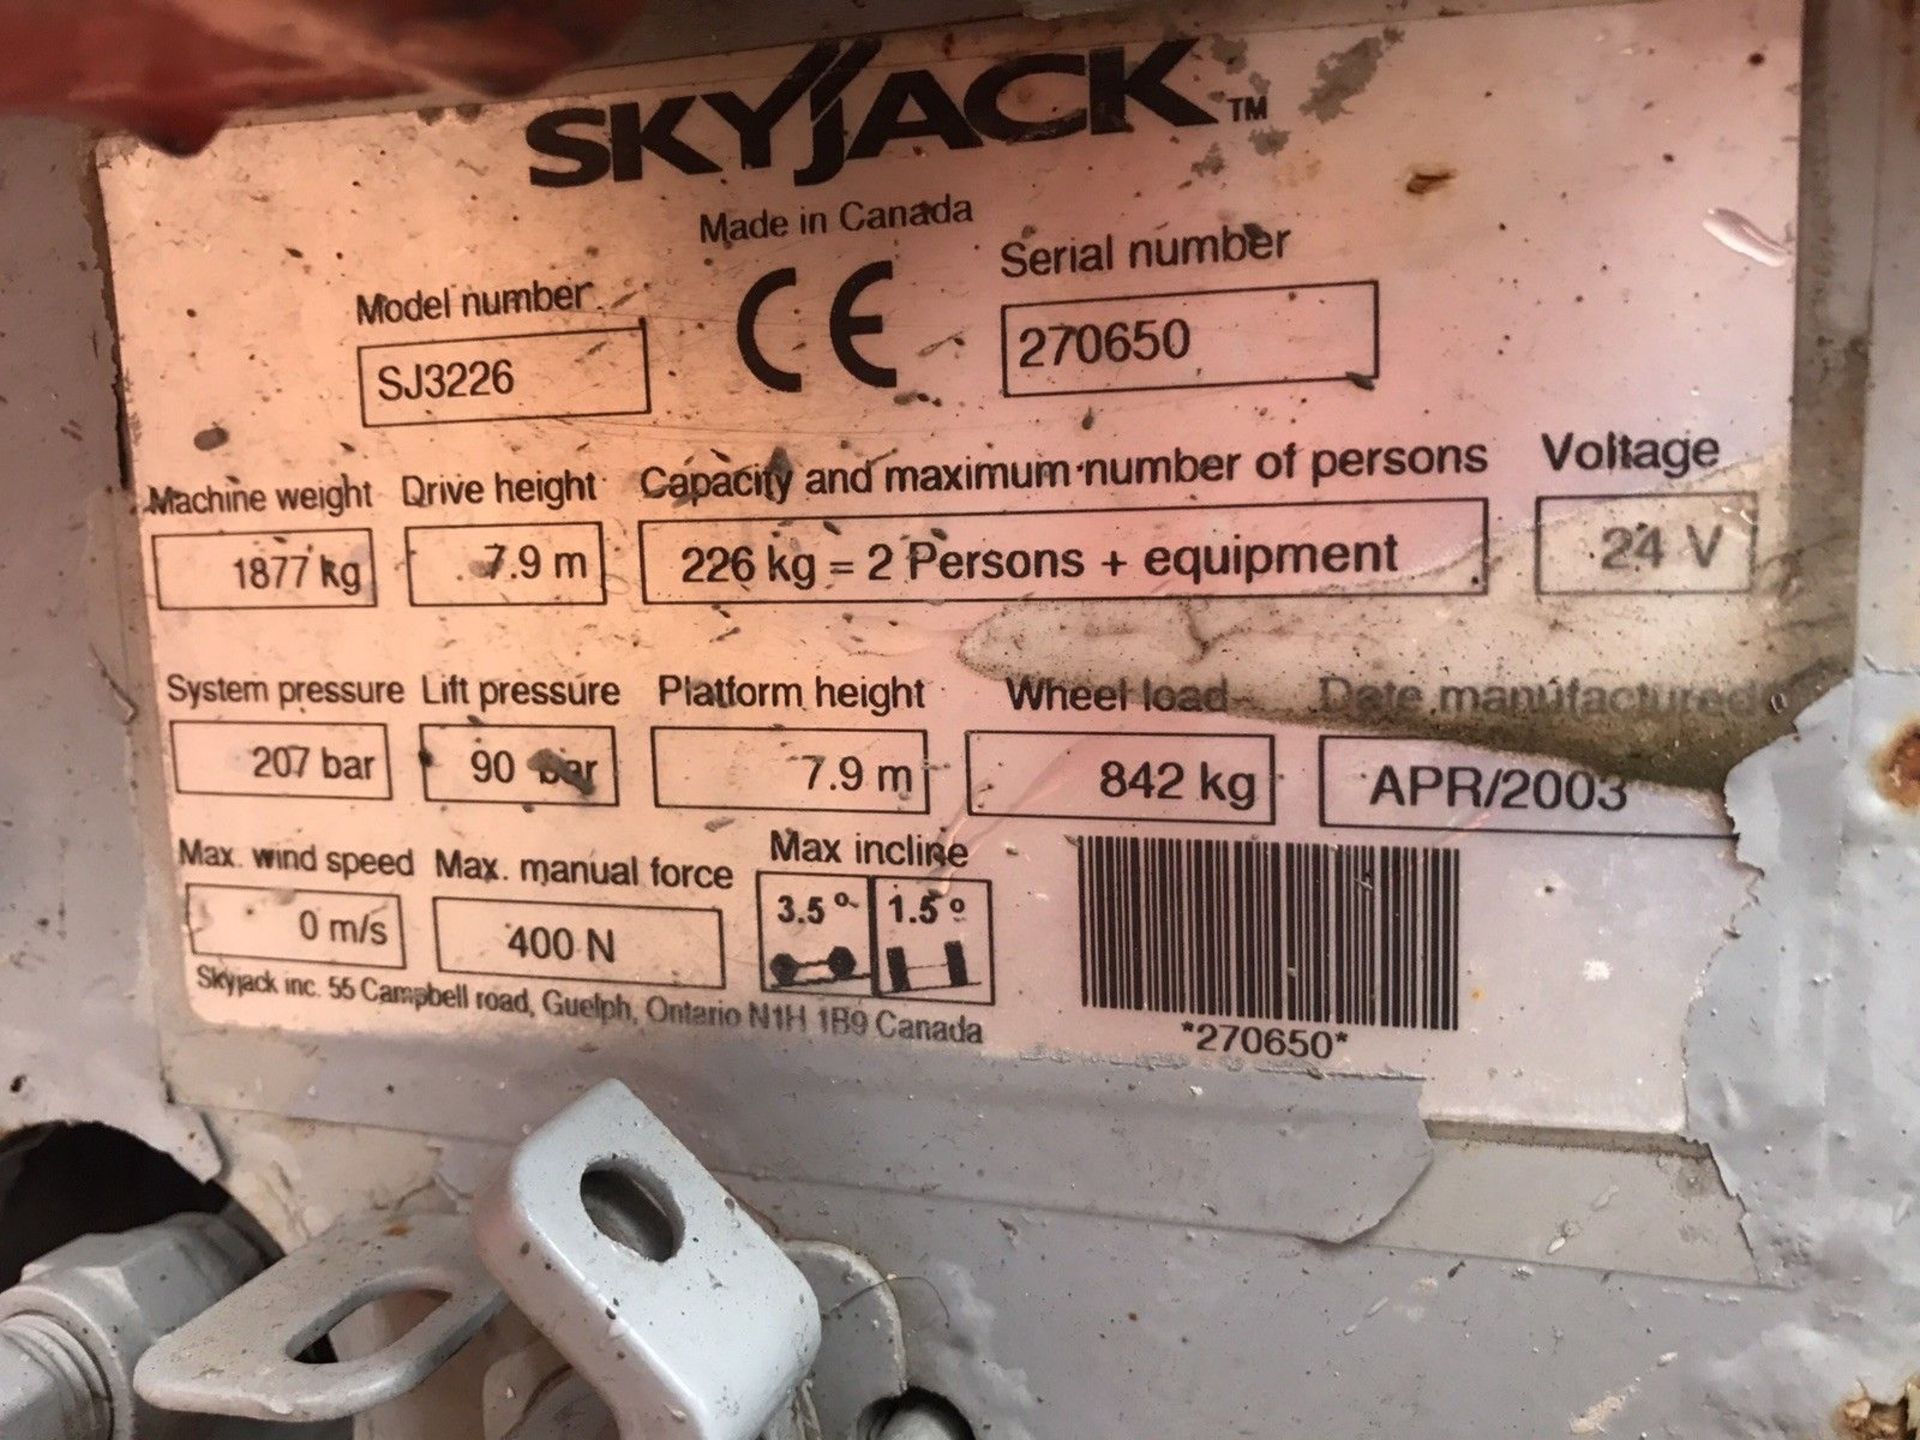 Skyjack SJ3226 scissor lift cherry Picker - Image 10 of 10